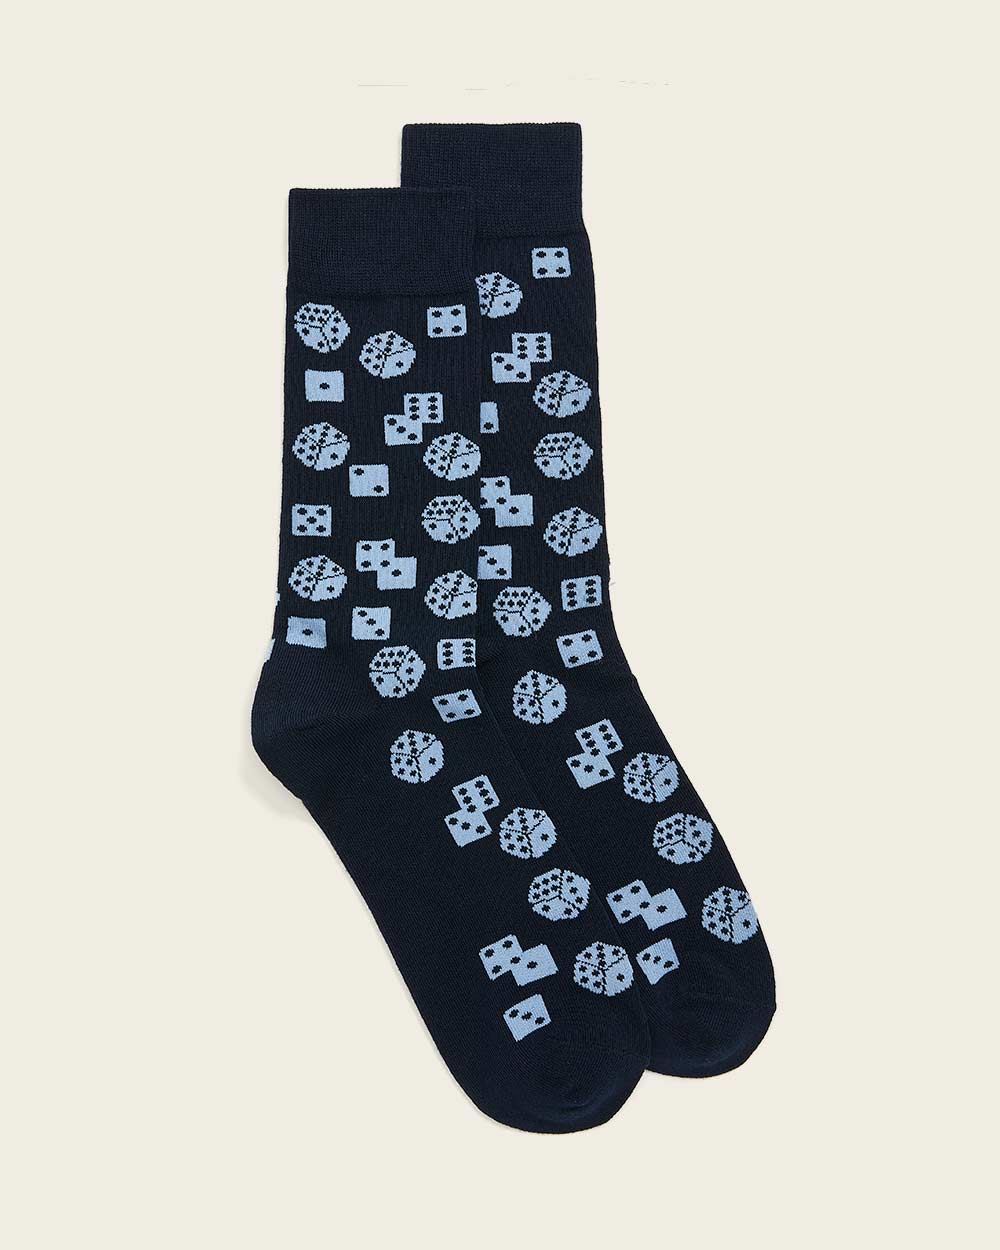 Rolling Dice Socks | RW&CO.